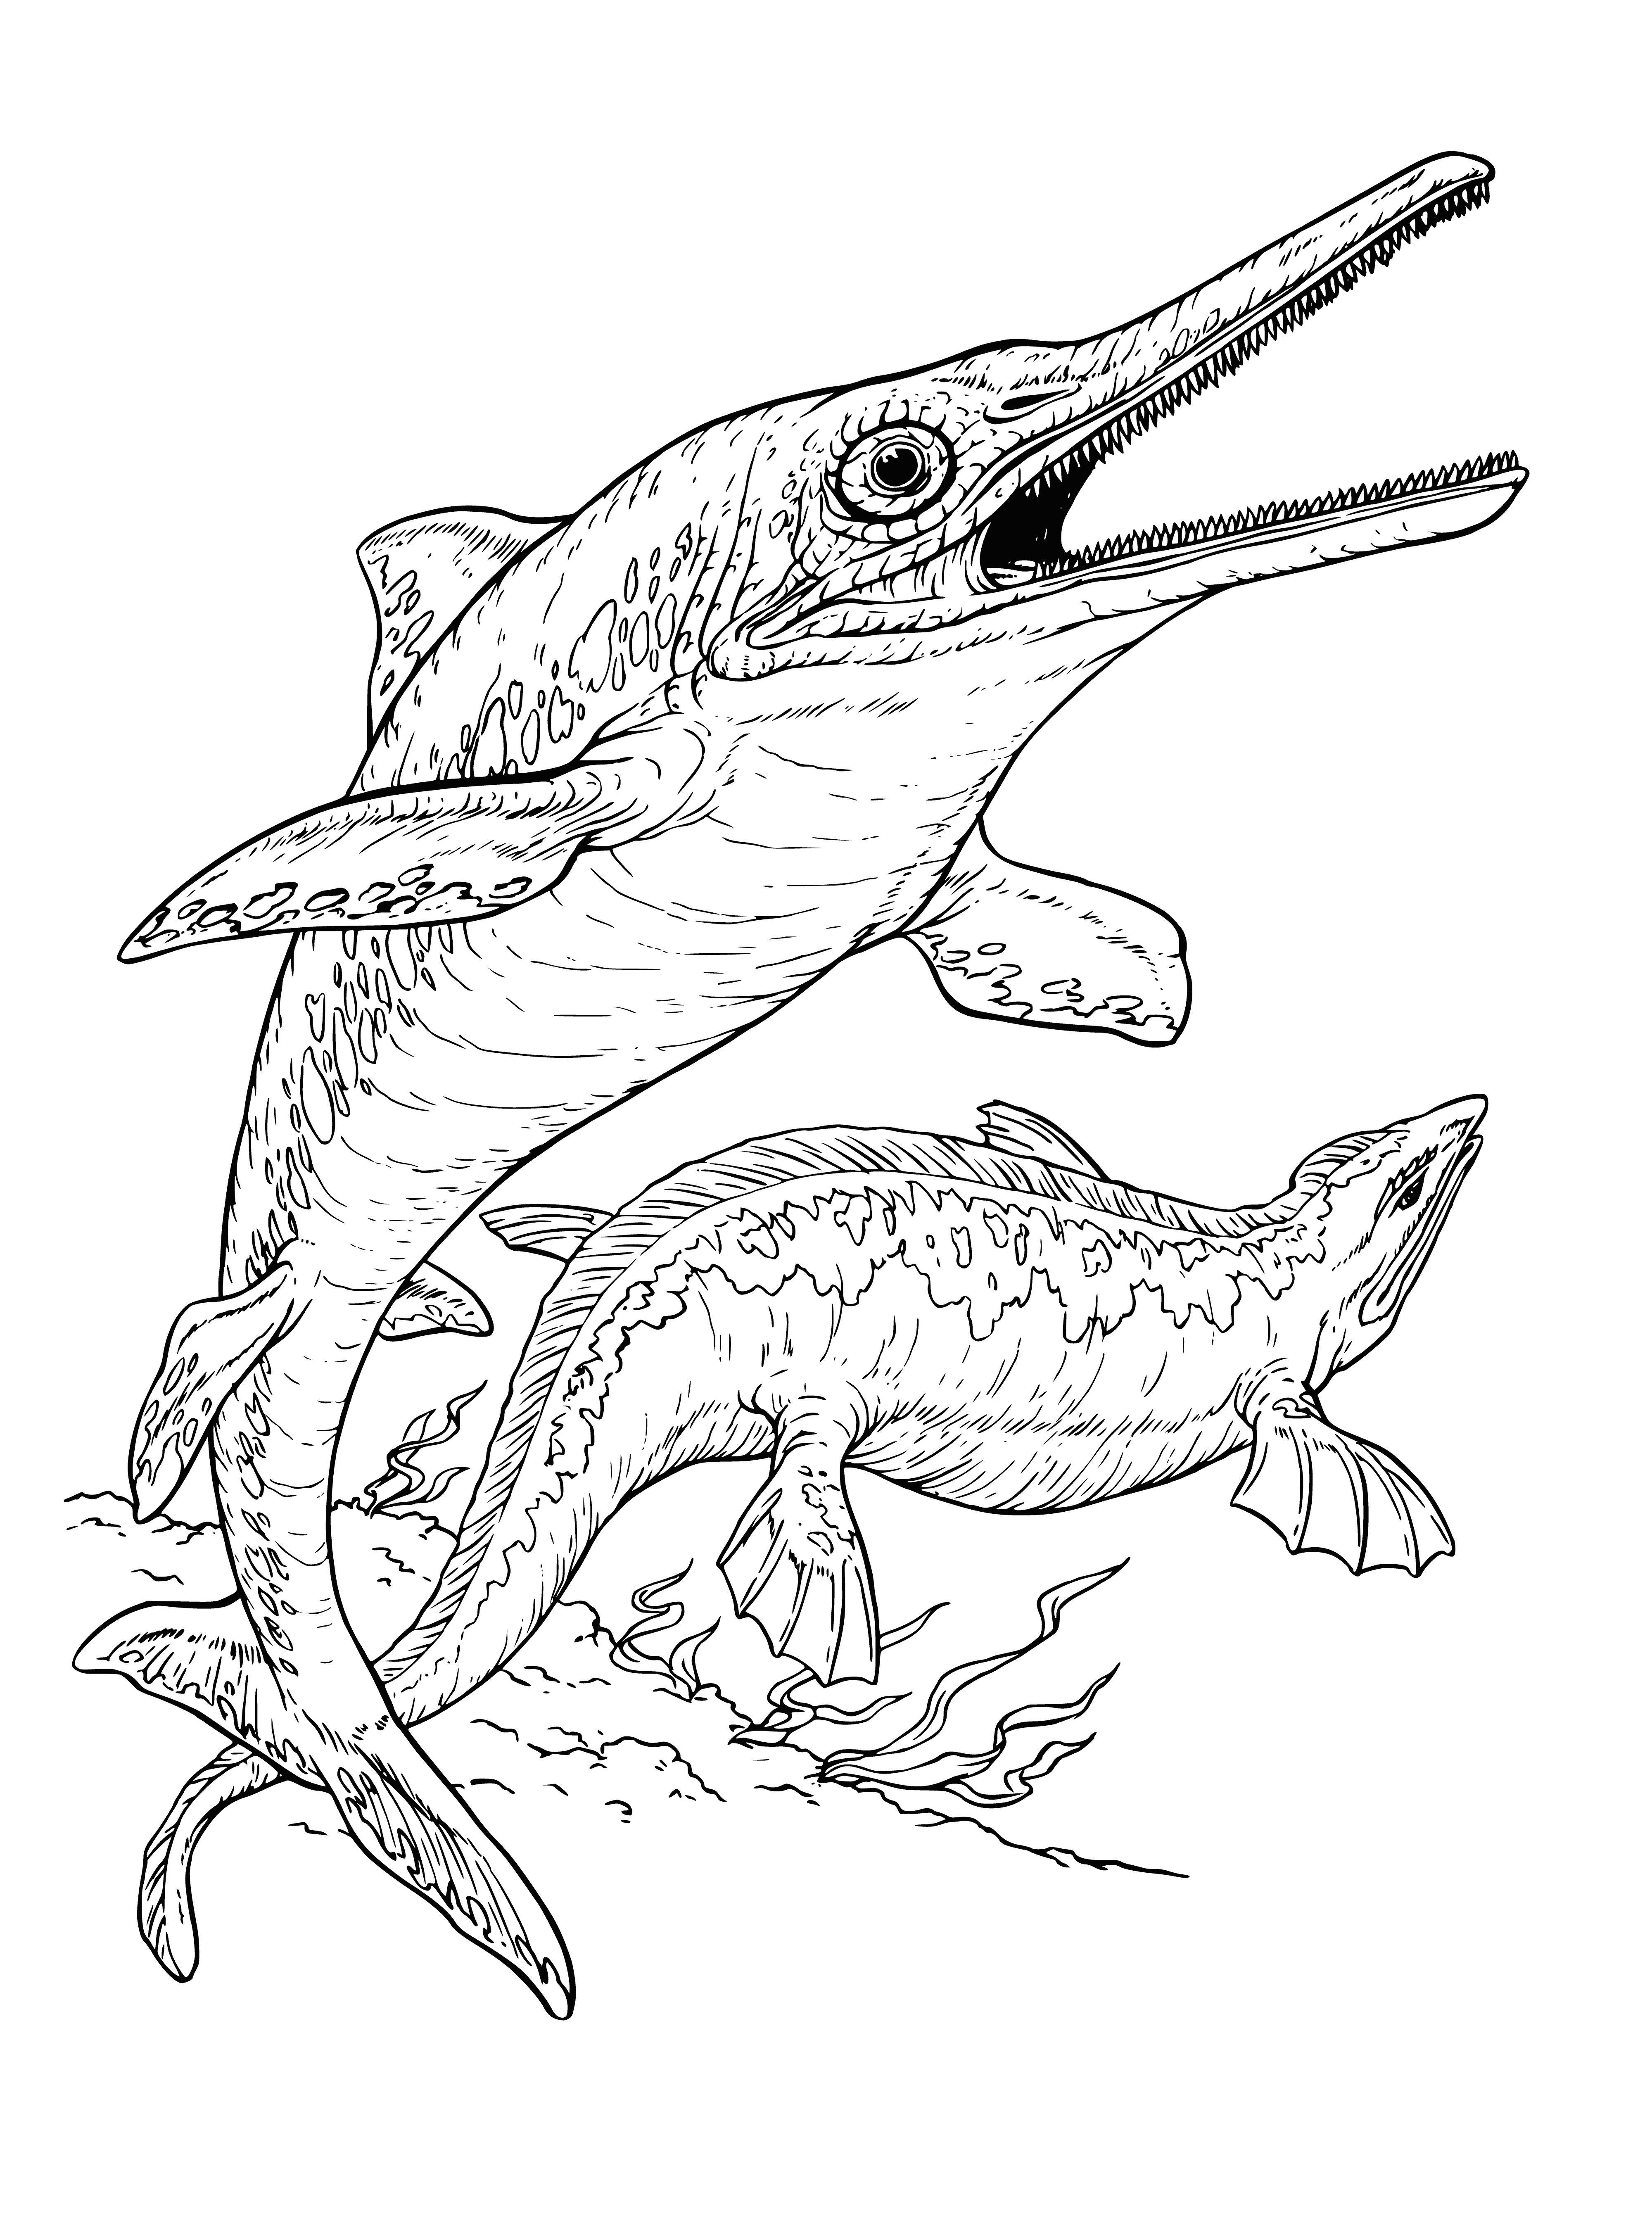 Ichthyosaur and pliosaurus coloring page